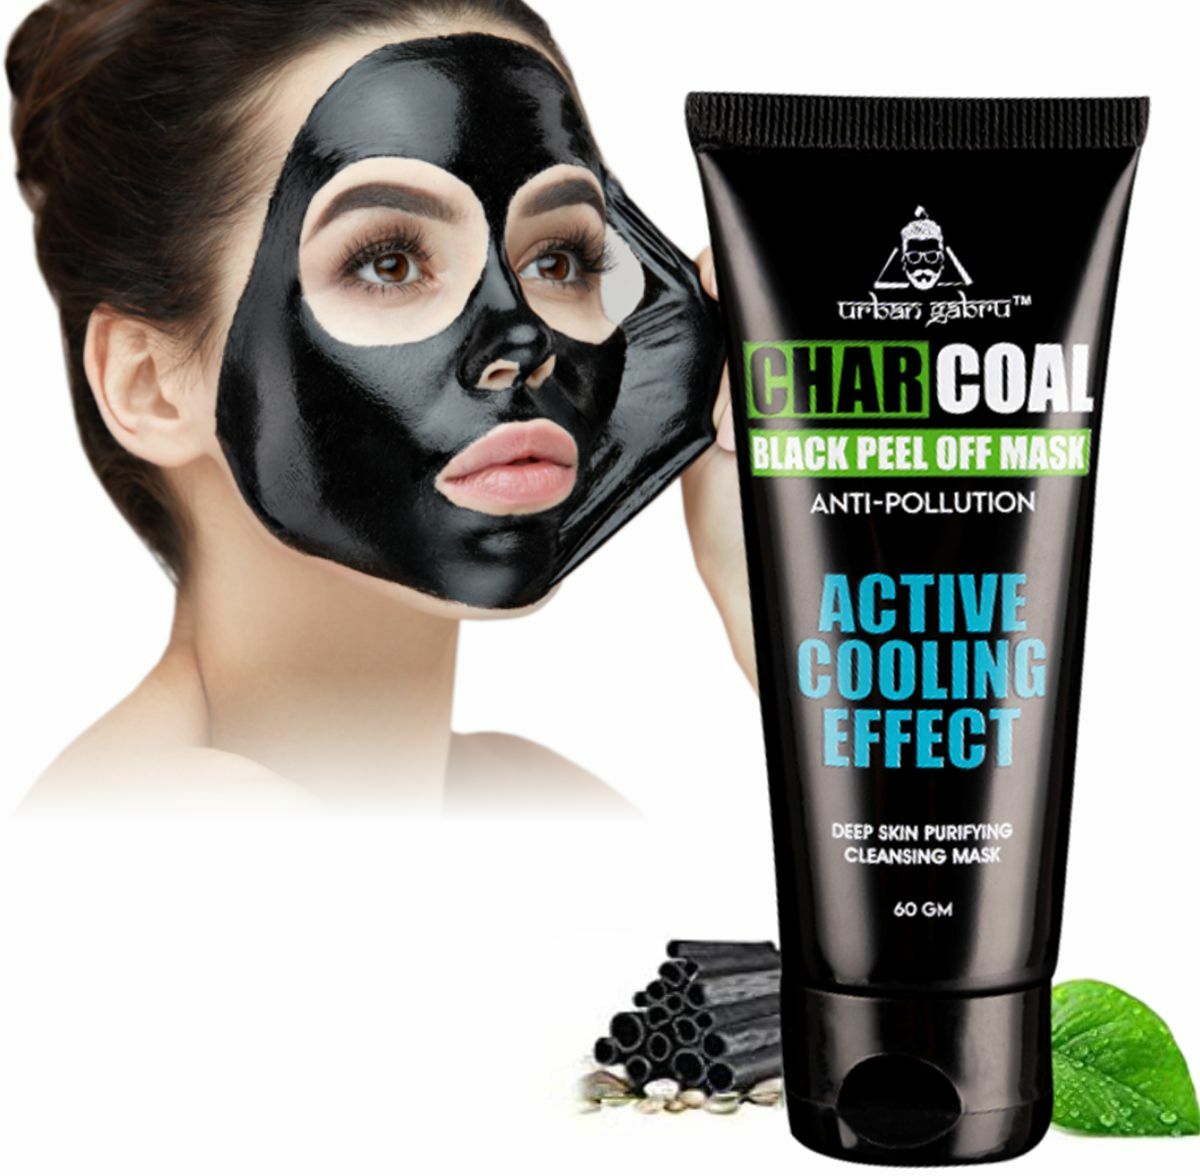 urbangabru Charcoal Black Peel Off Mask Anti pollution